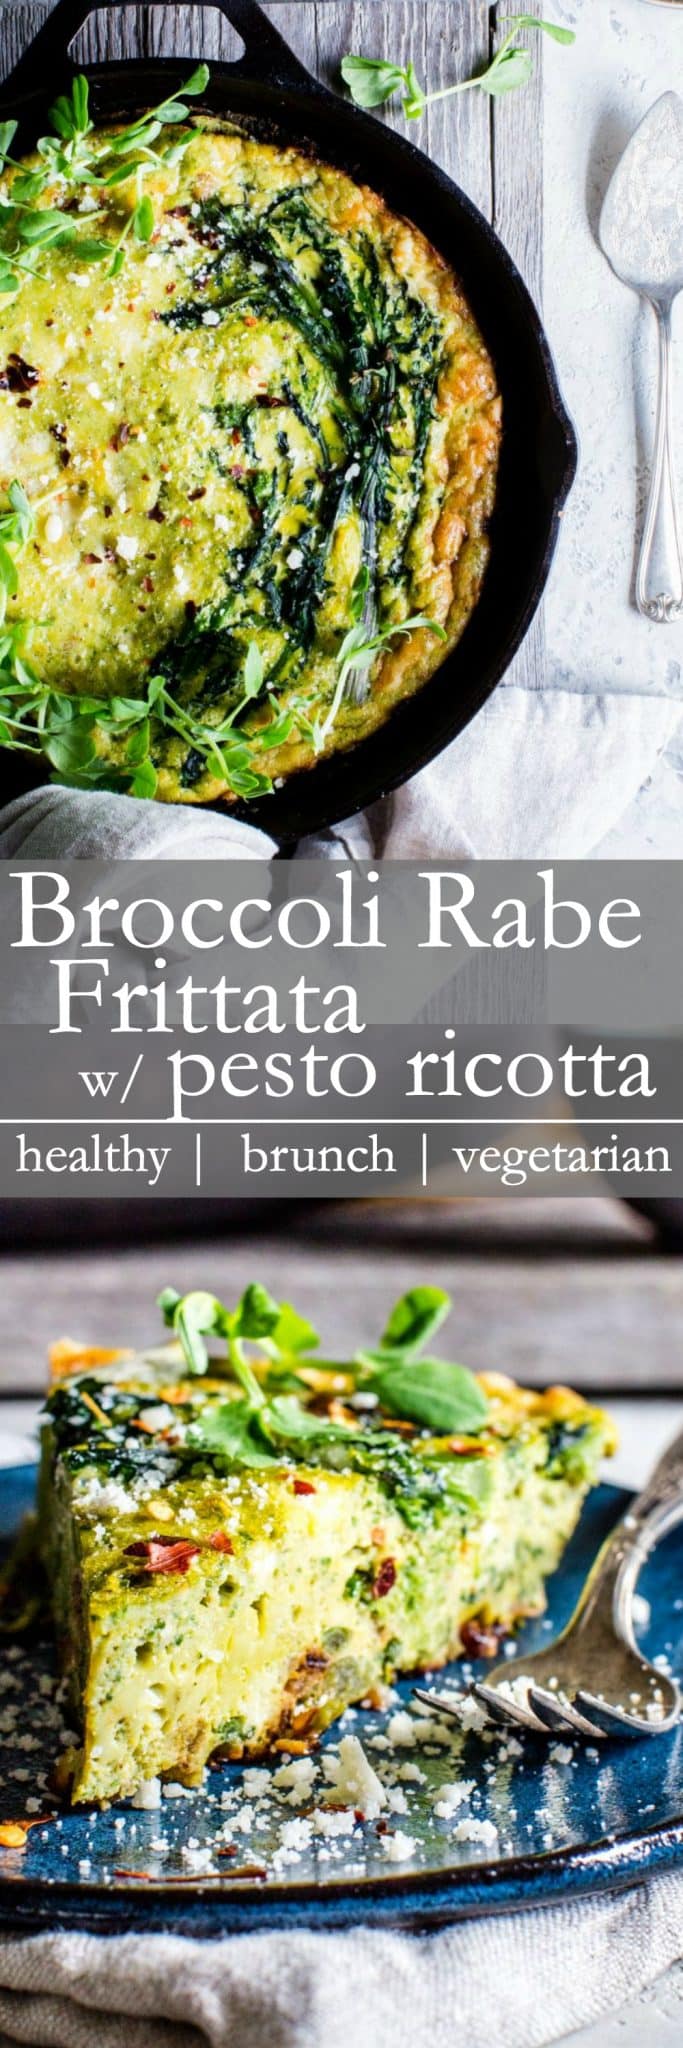 Pinterest pin for broccoli rabe frittata. 